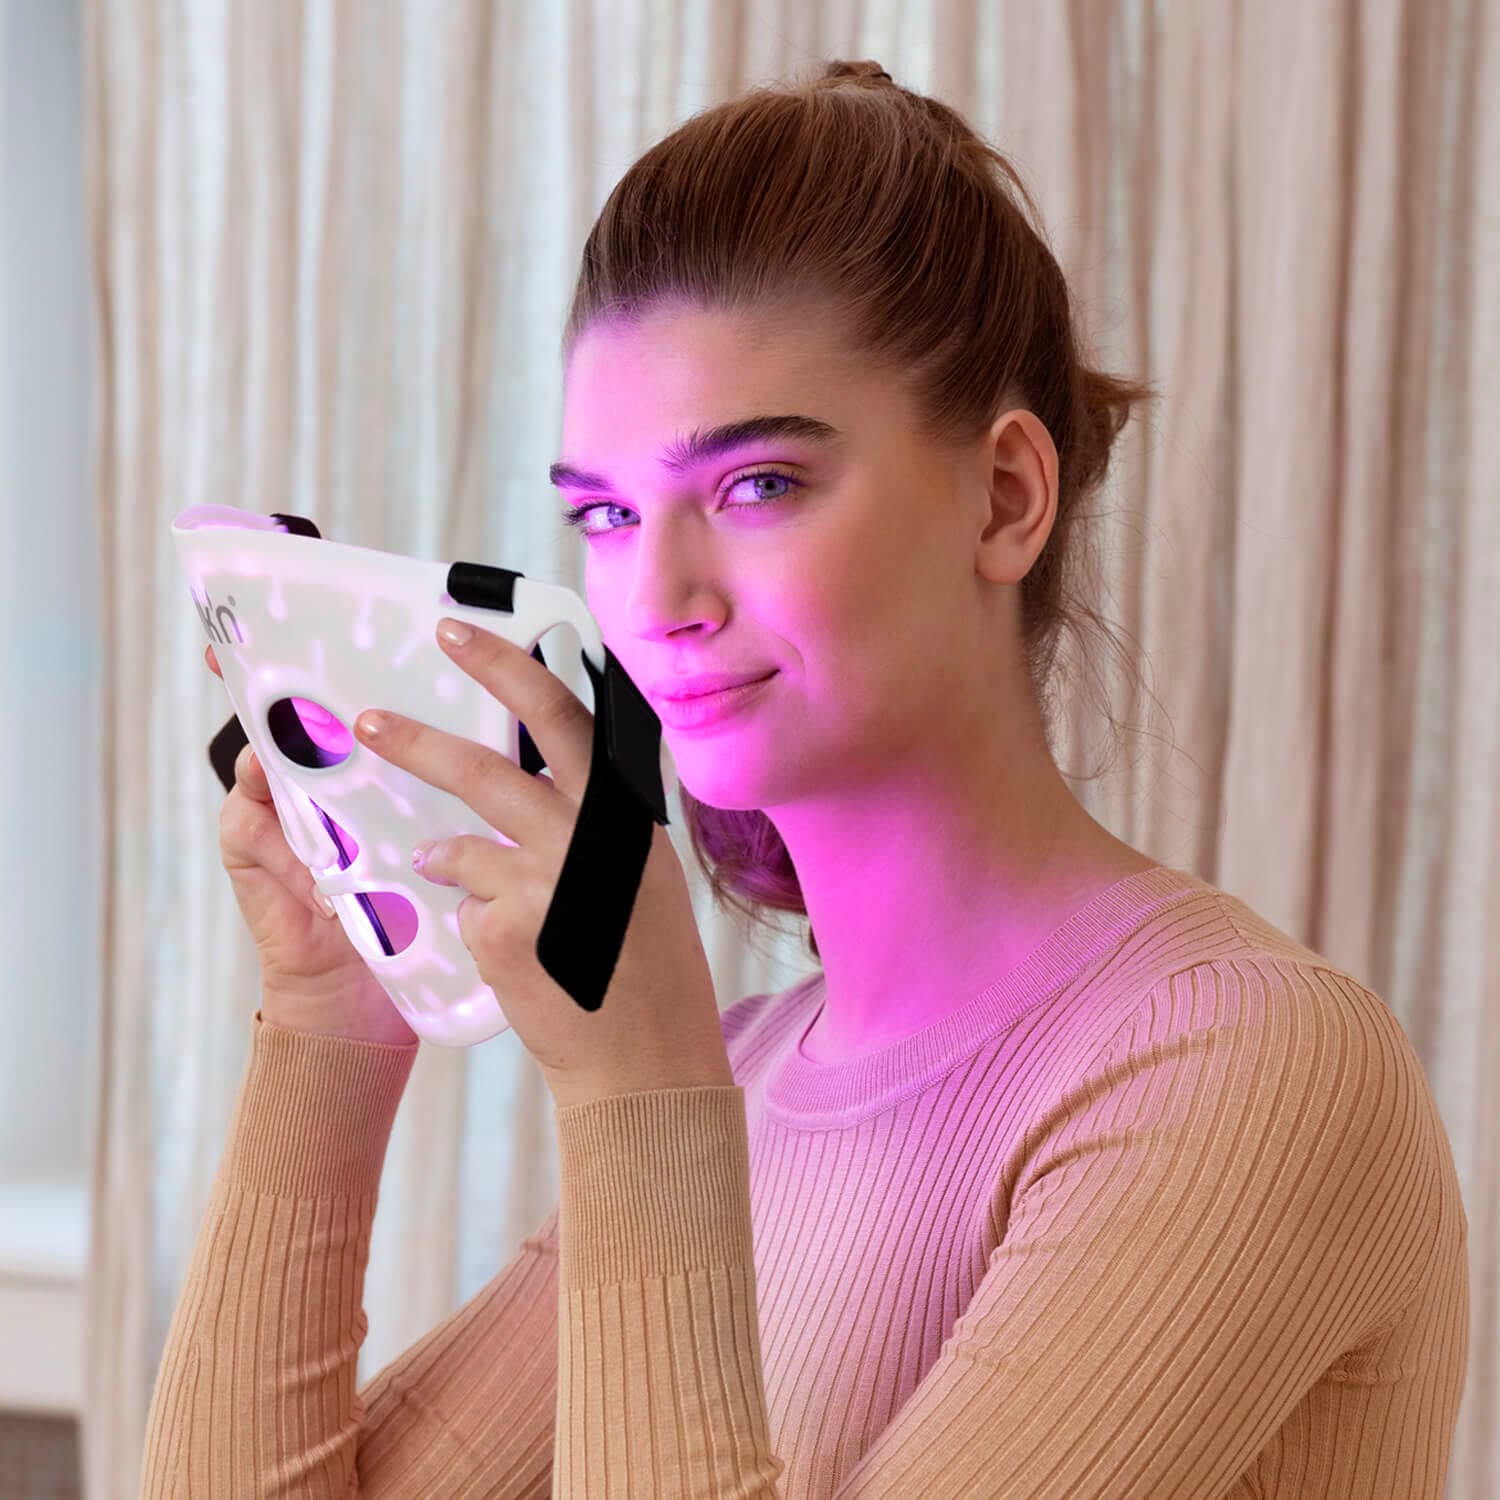 Silk'n Kosmetikbehandlungsgerät »LED Face Mask 100«, LED Gesichtsmaske mit 4 Lichtfarben